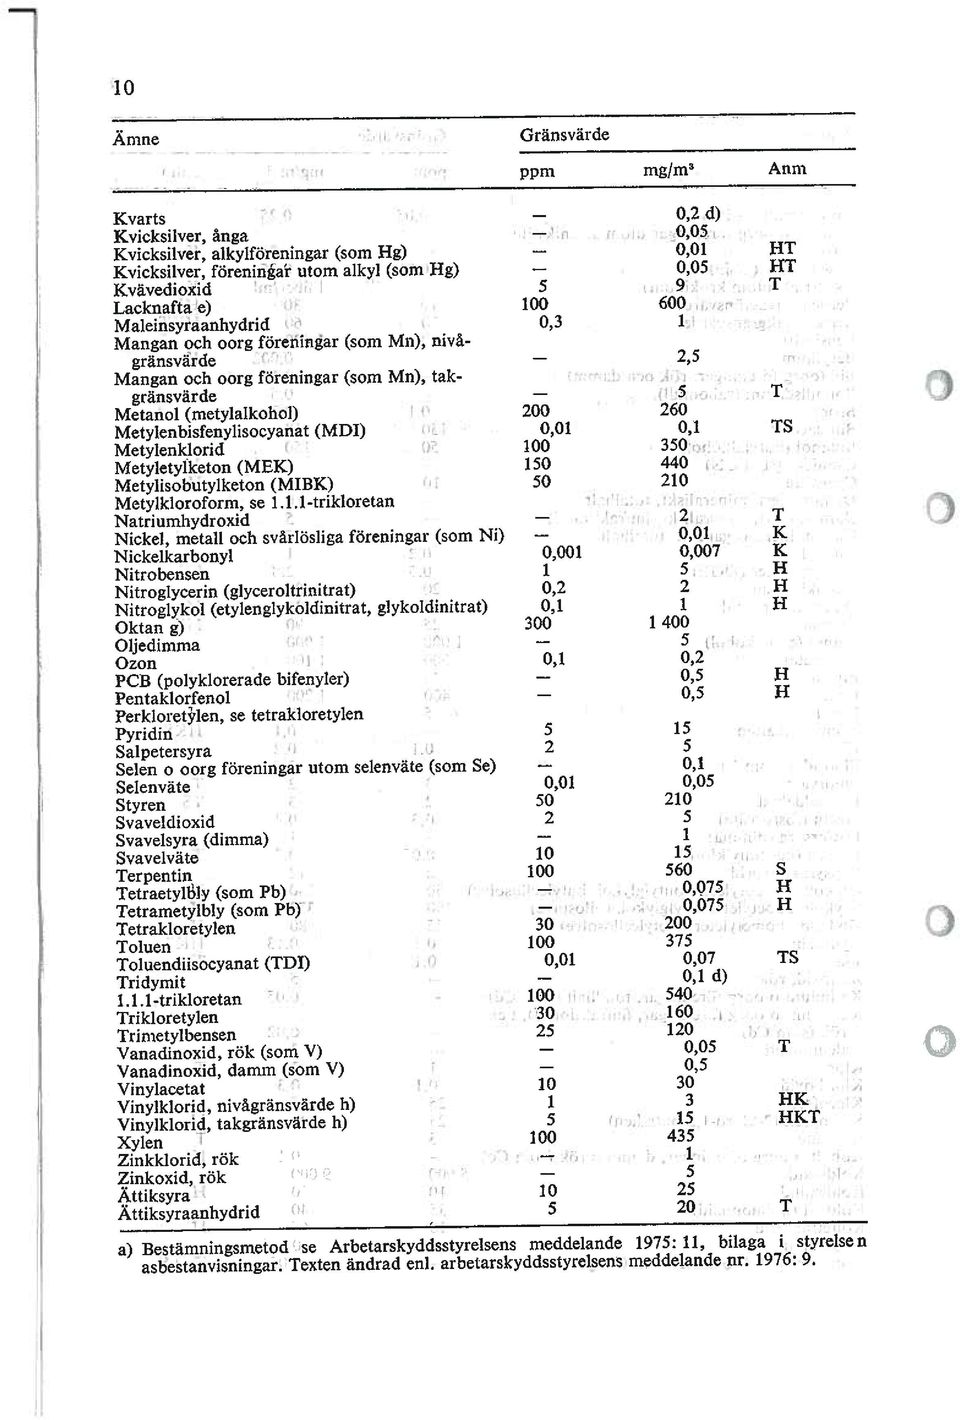 Metylenbisfenylisocyanat (MDI) 0,01 